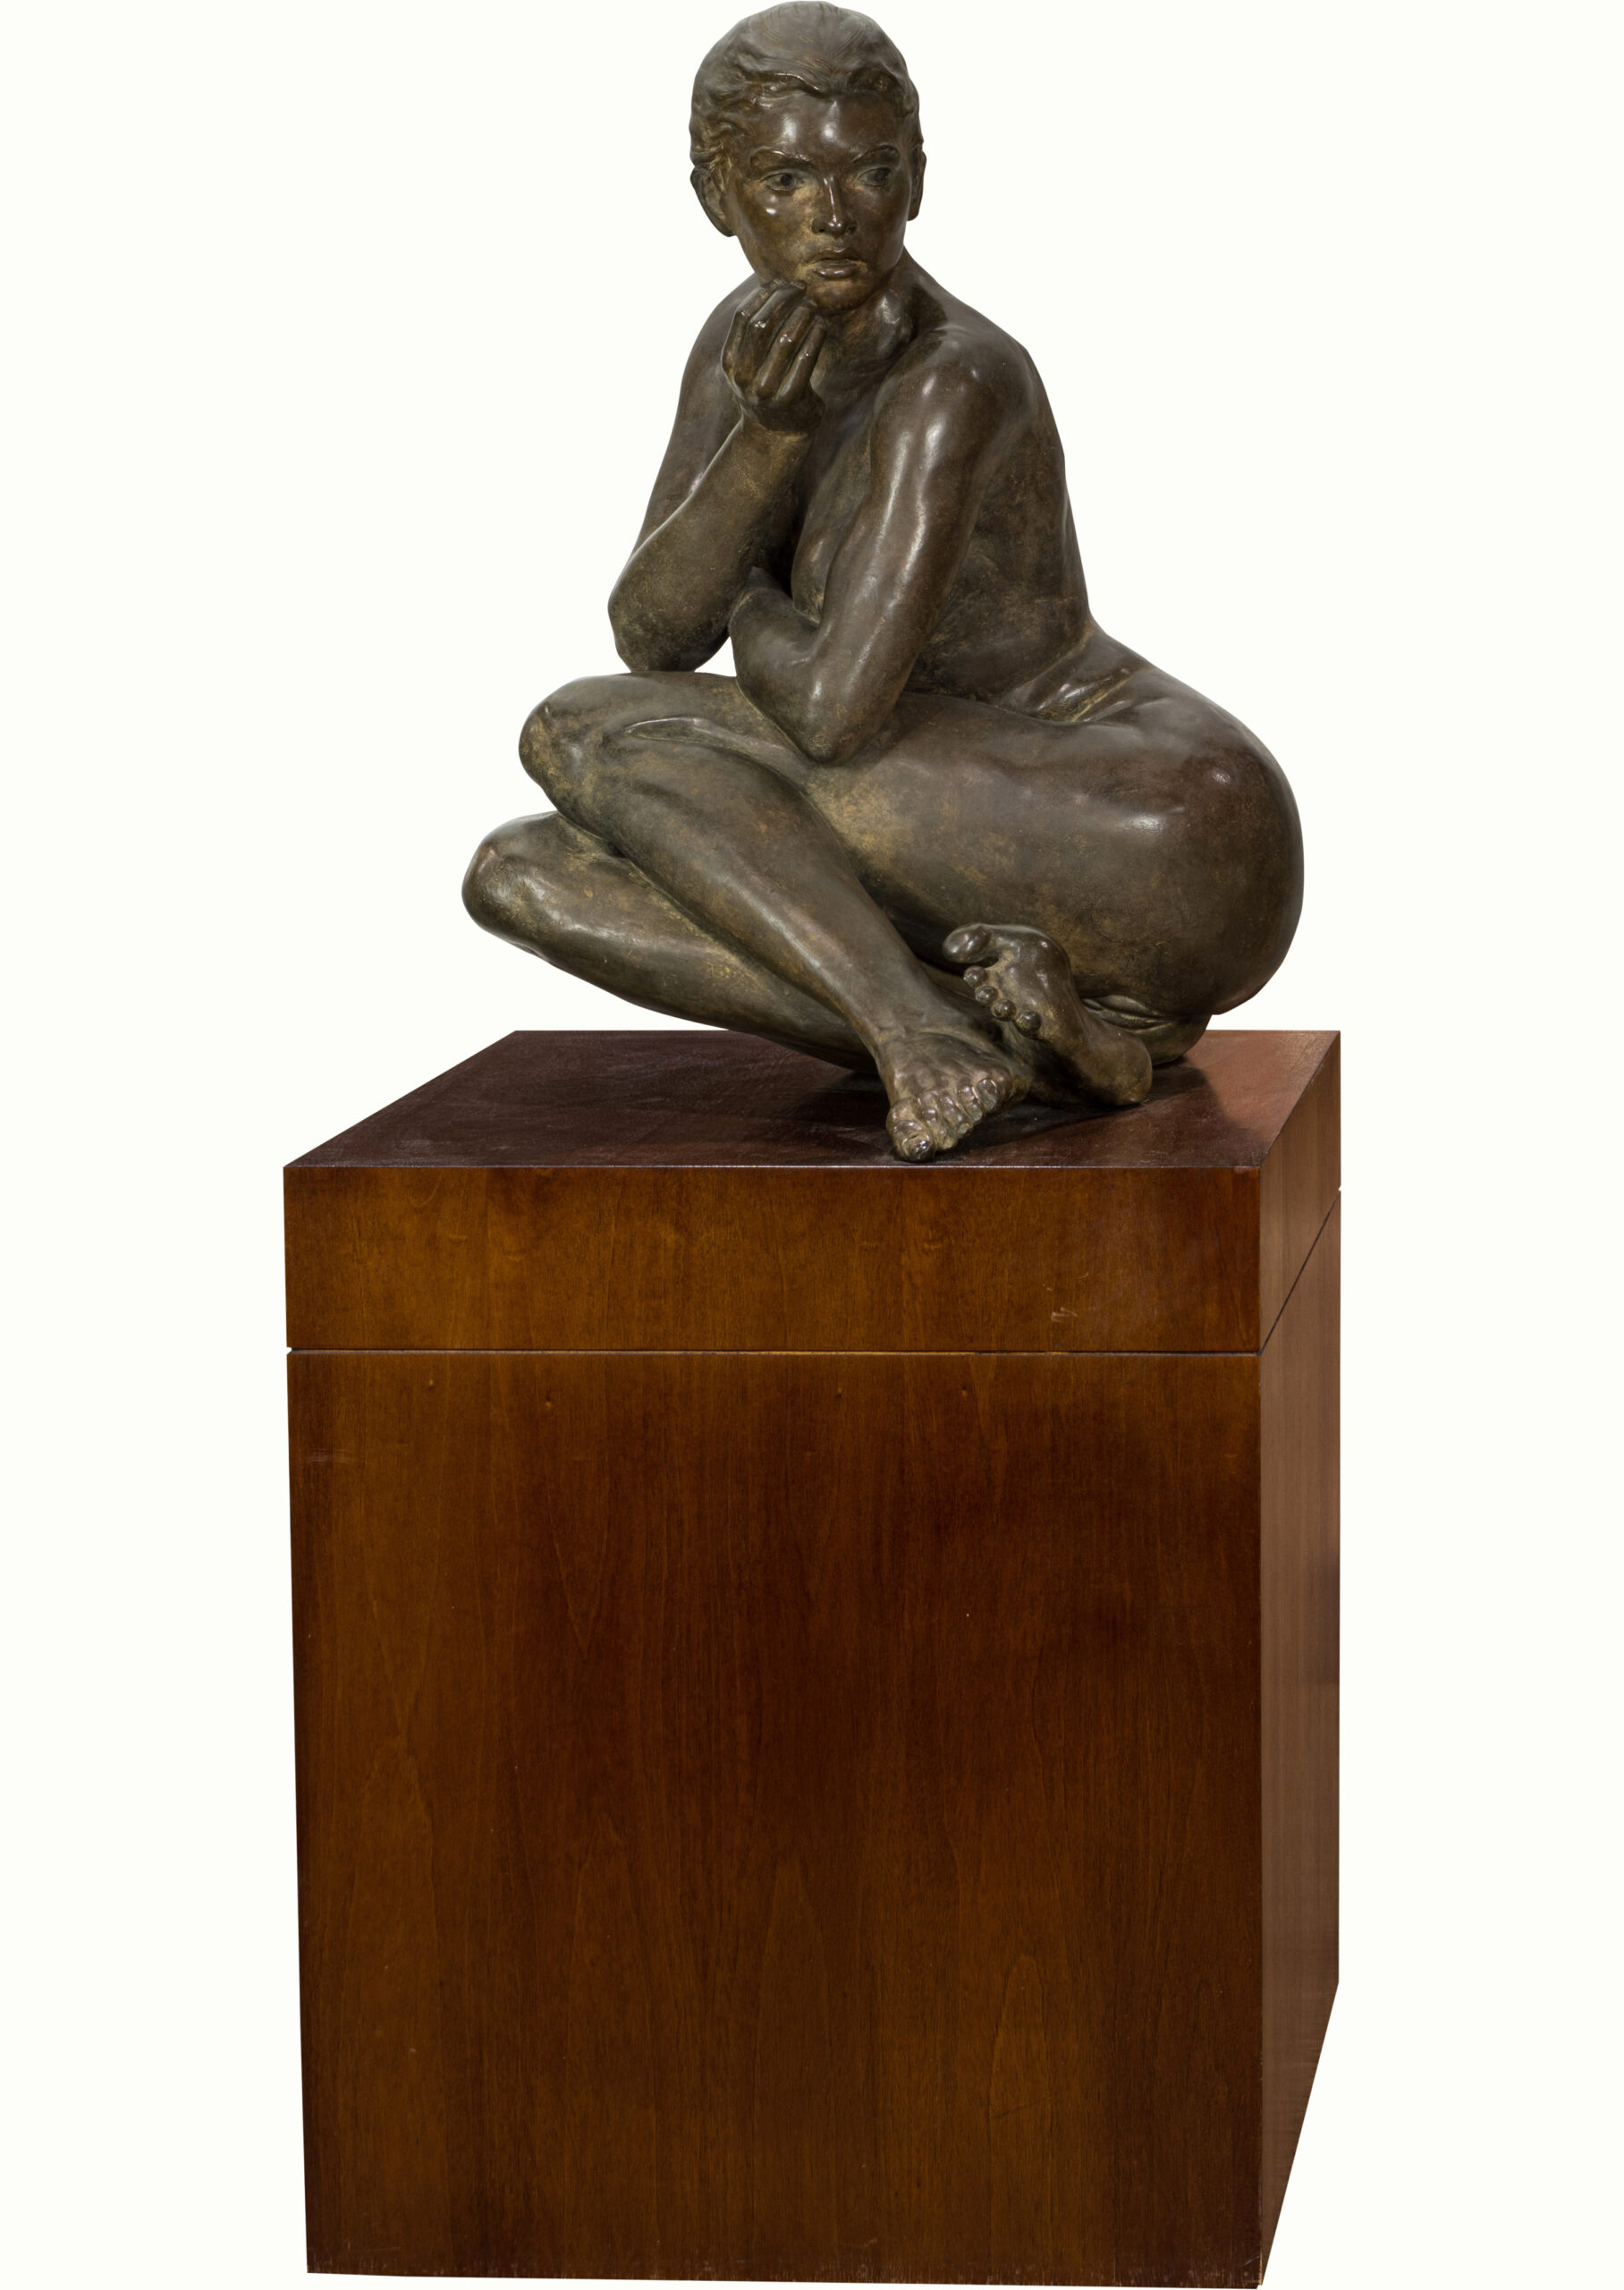 Eric Goulder (American, b. 1954), The Woman, 1991, bronze sculpture, overall: 32″ x 21″ x 23″.